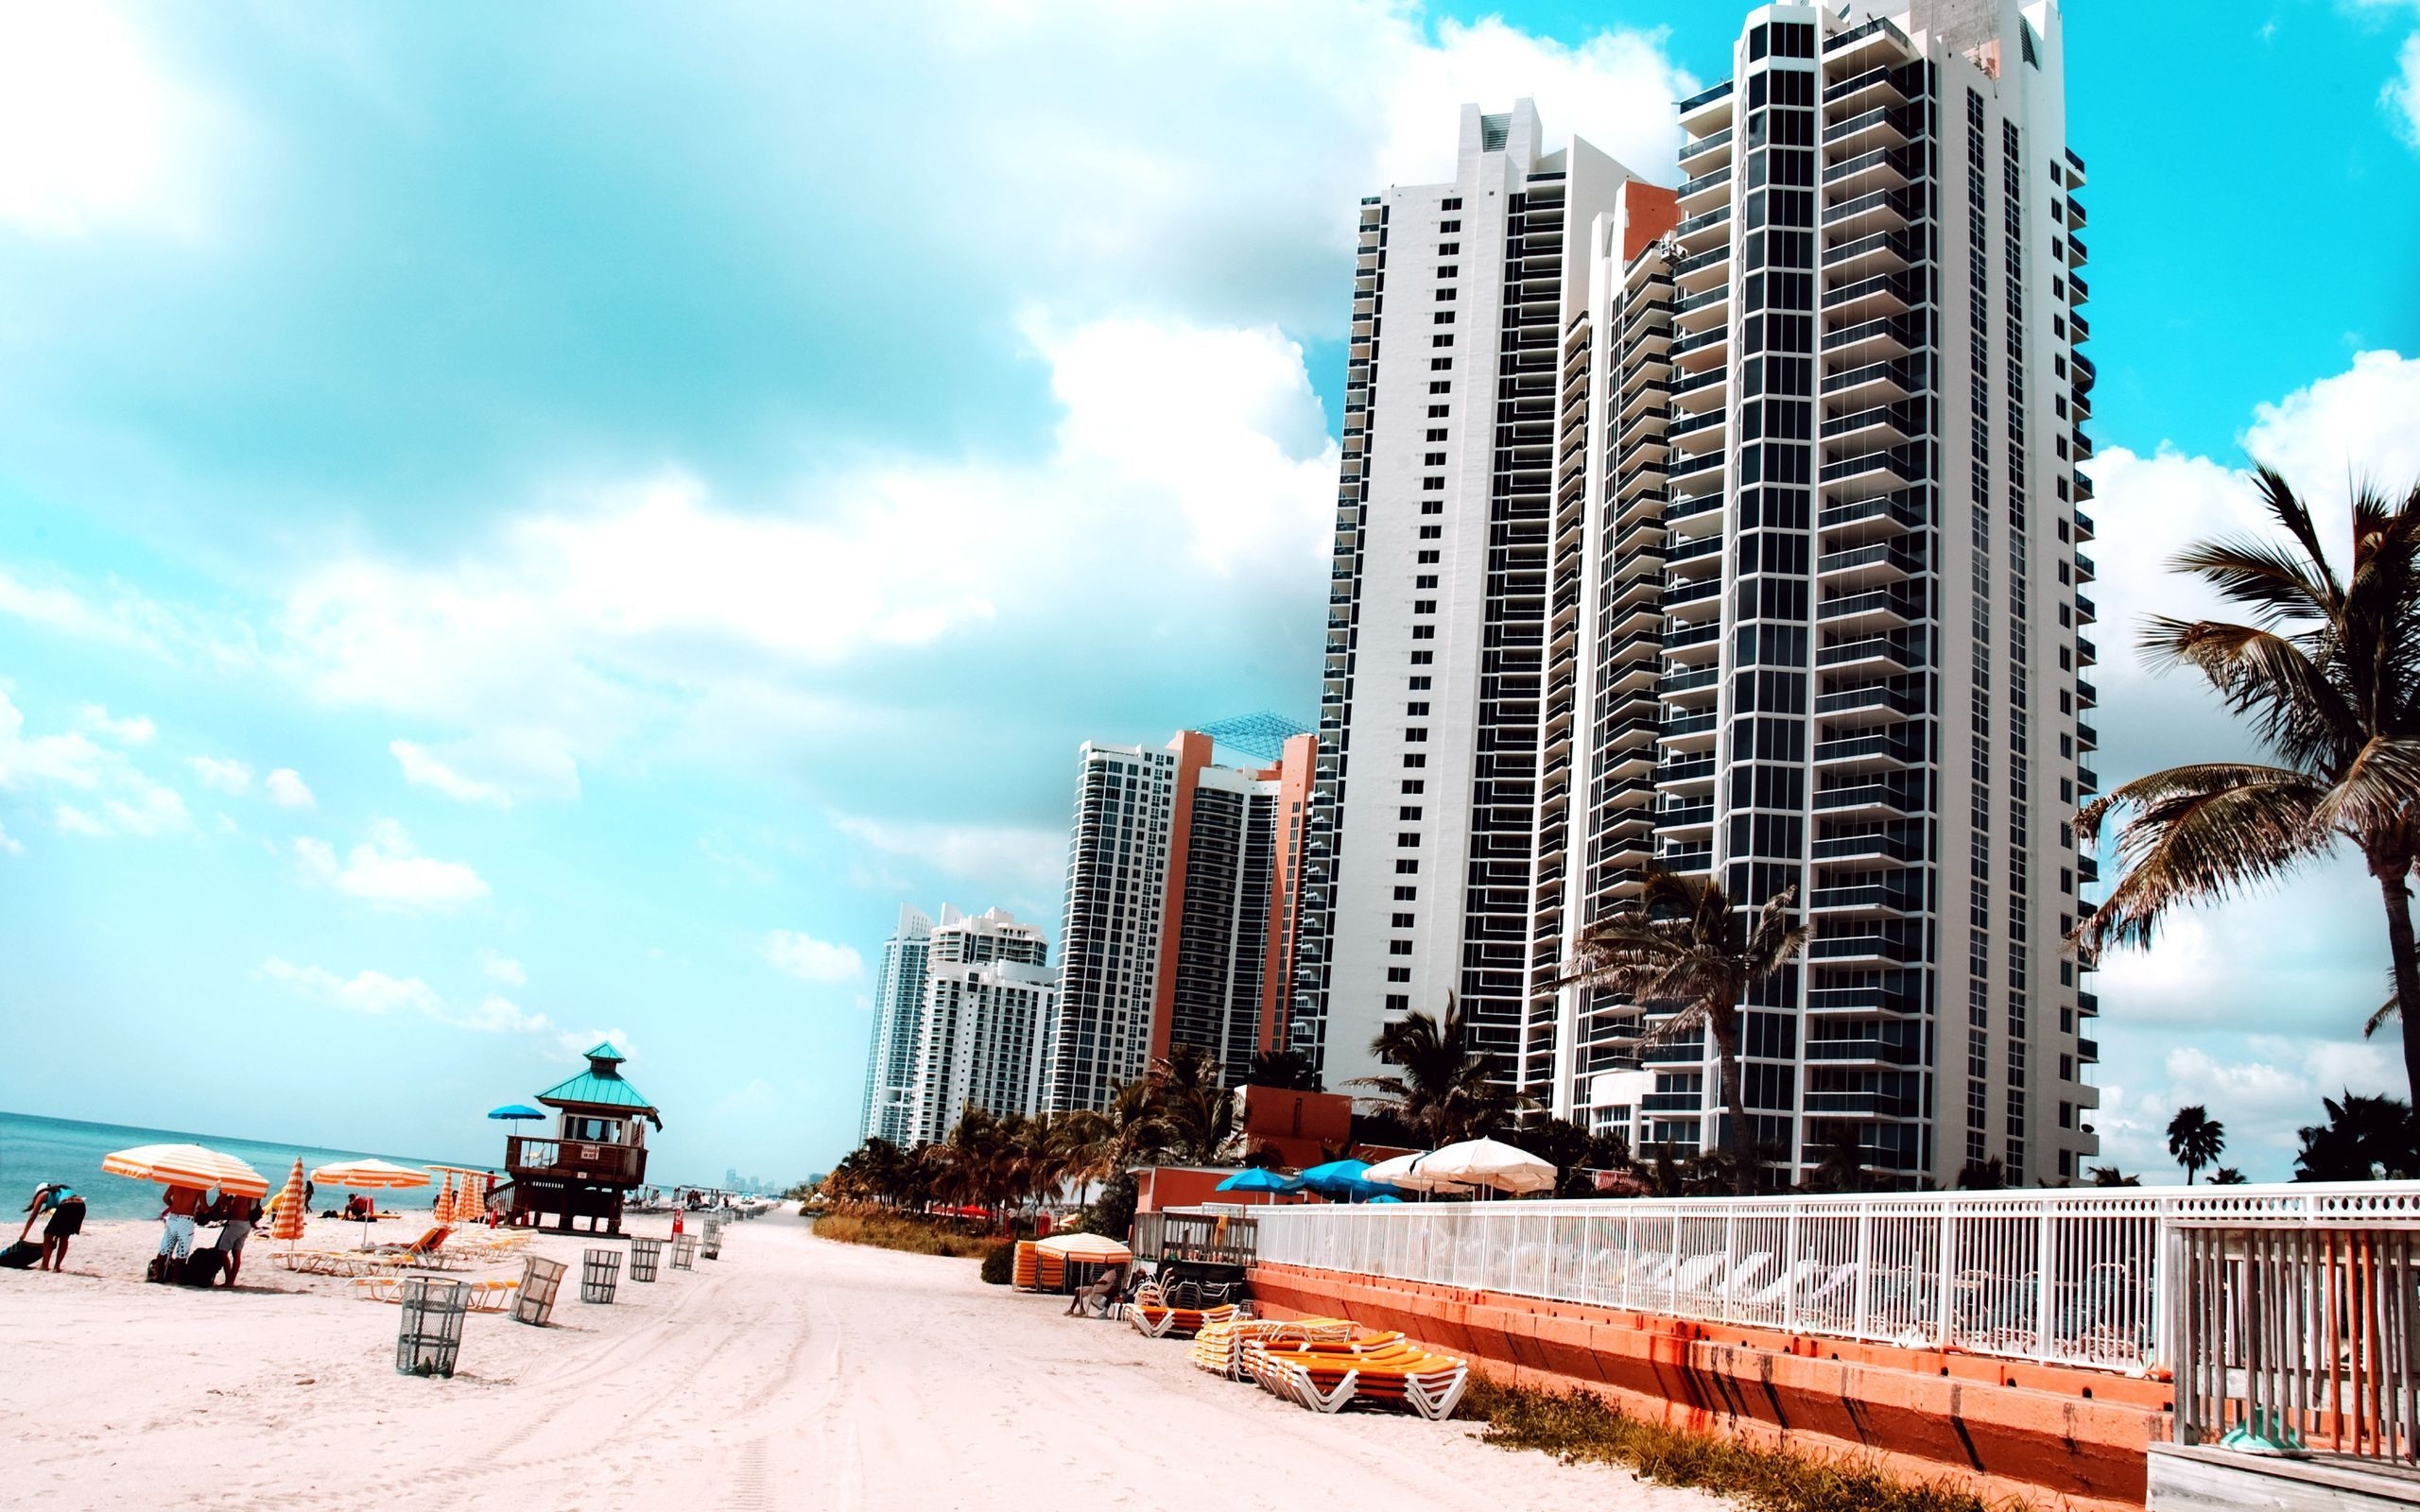 Miami for 2560 x 1600 widescreen resolution